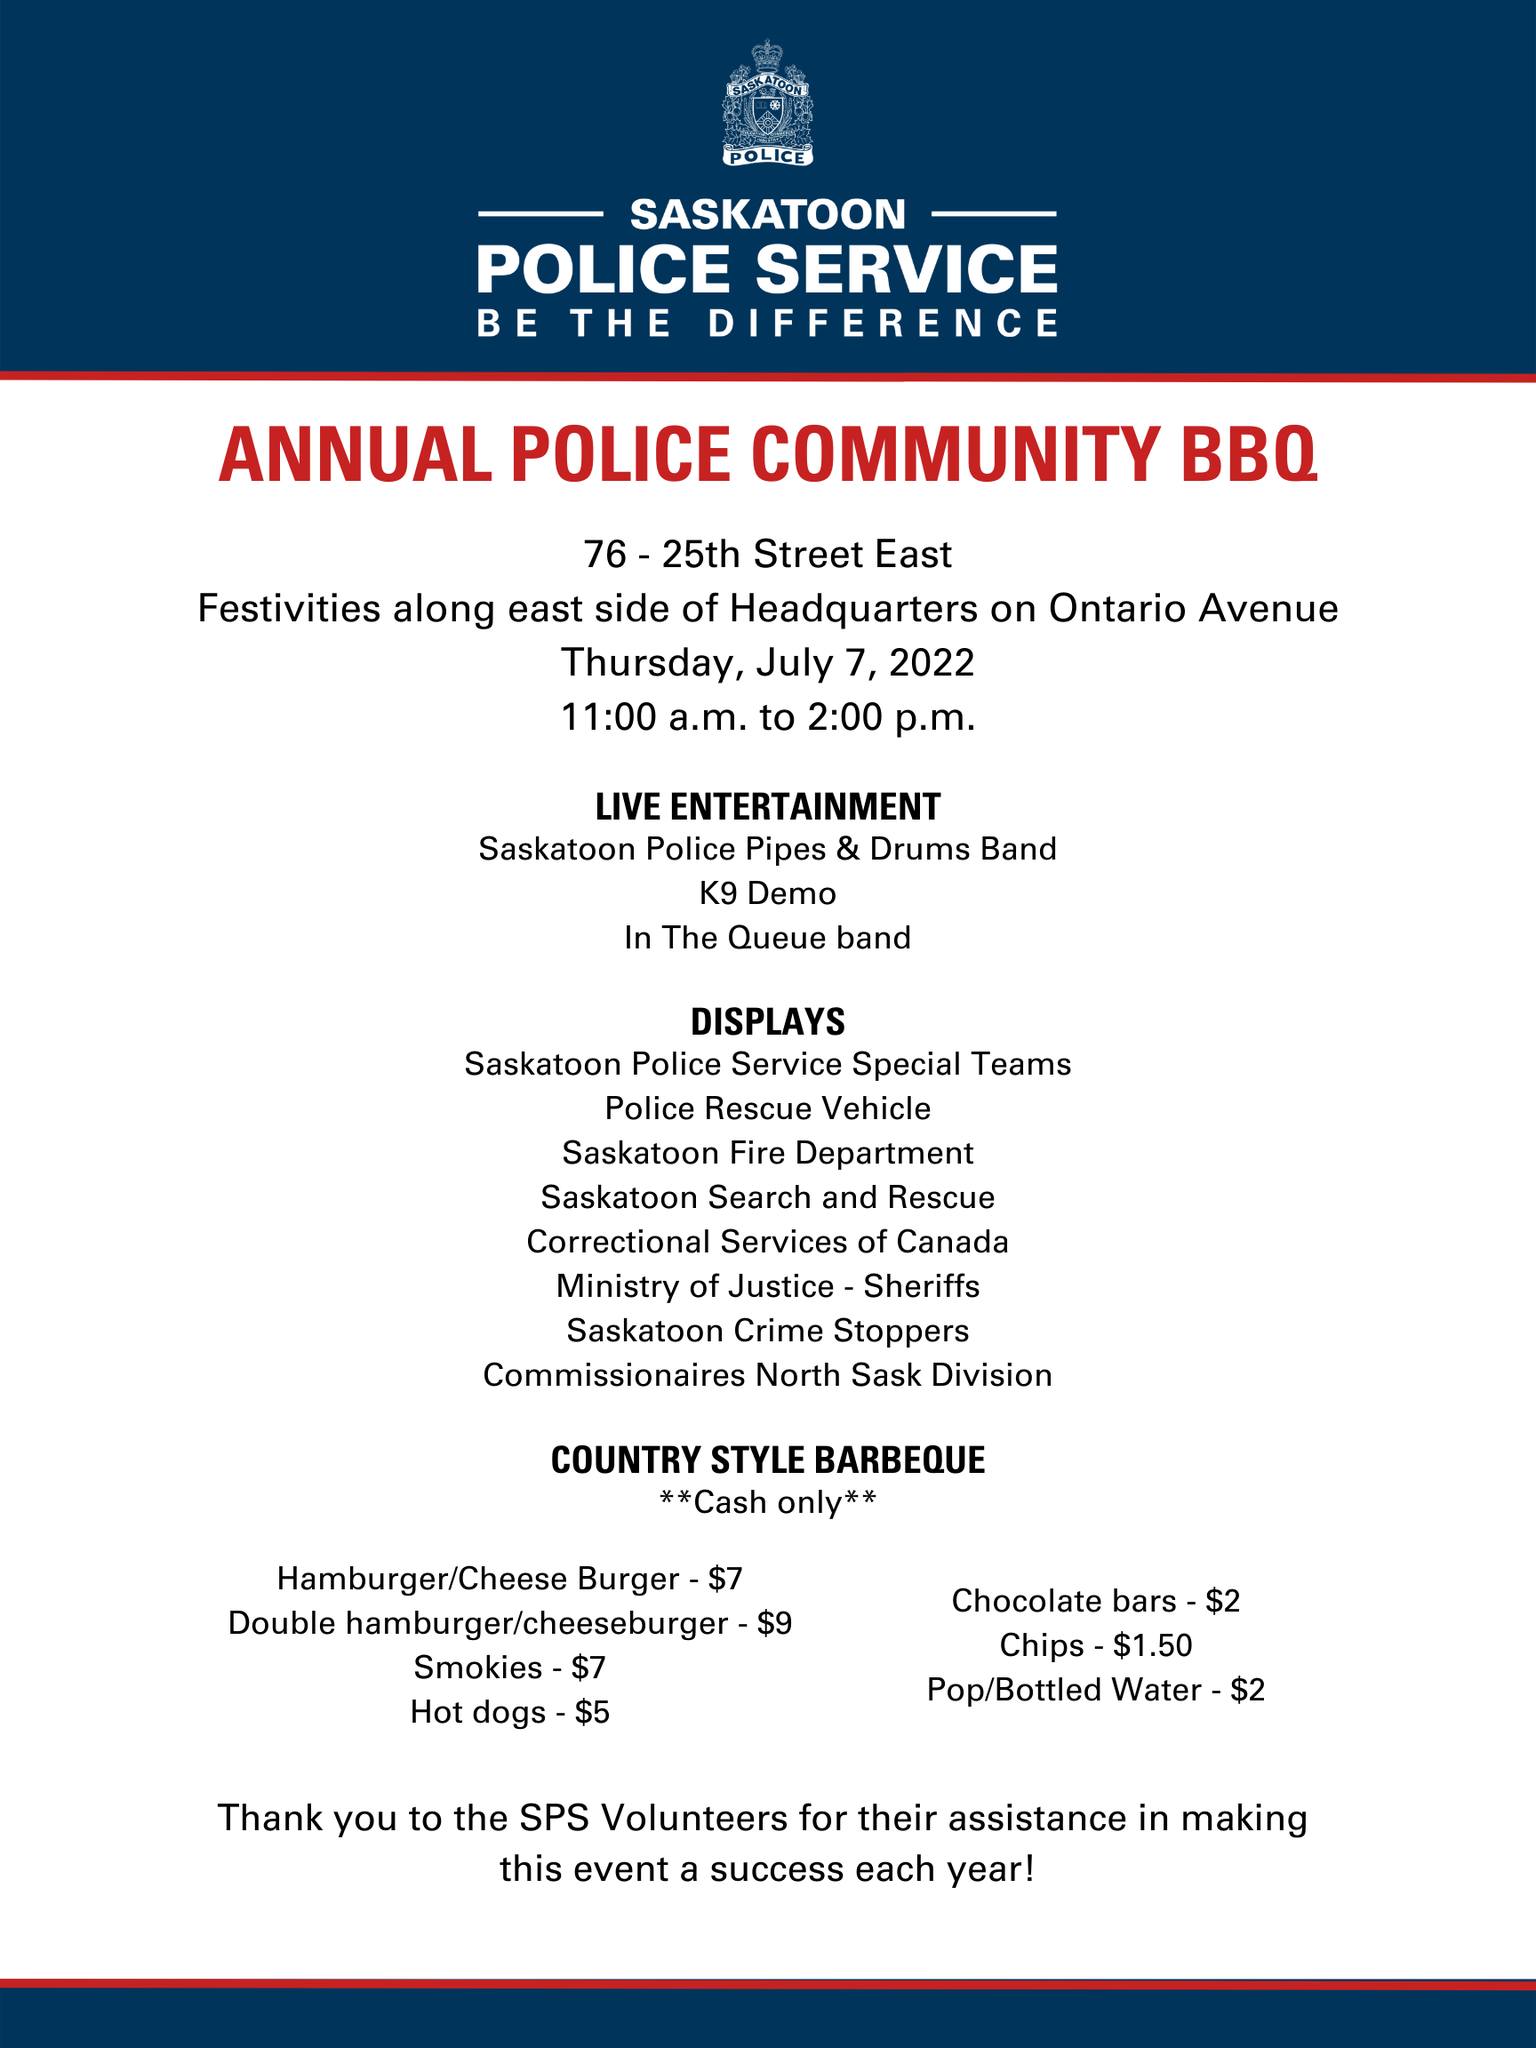 Annual Police Community BBQ